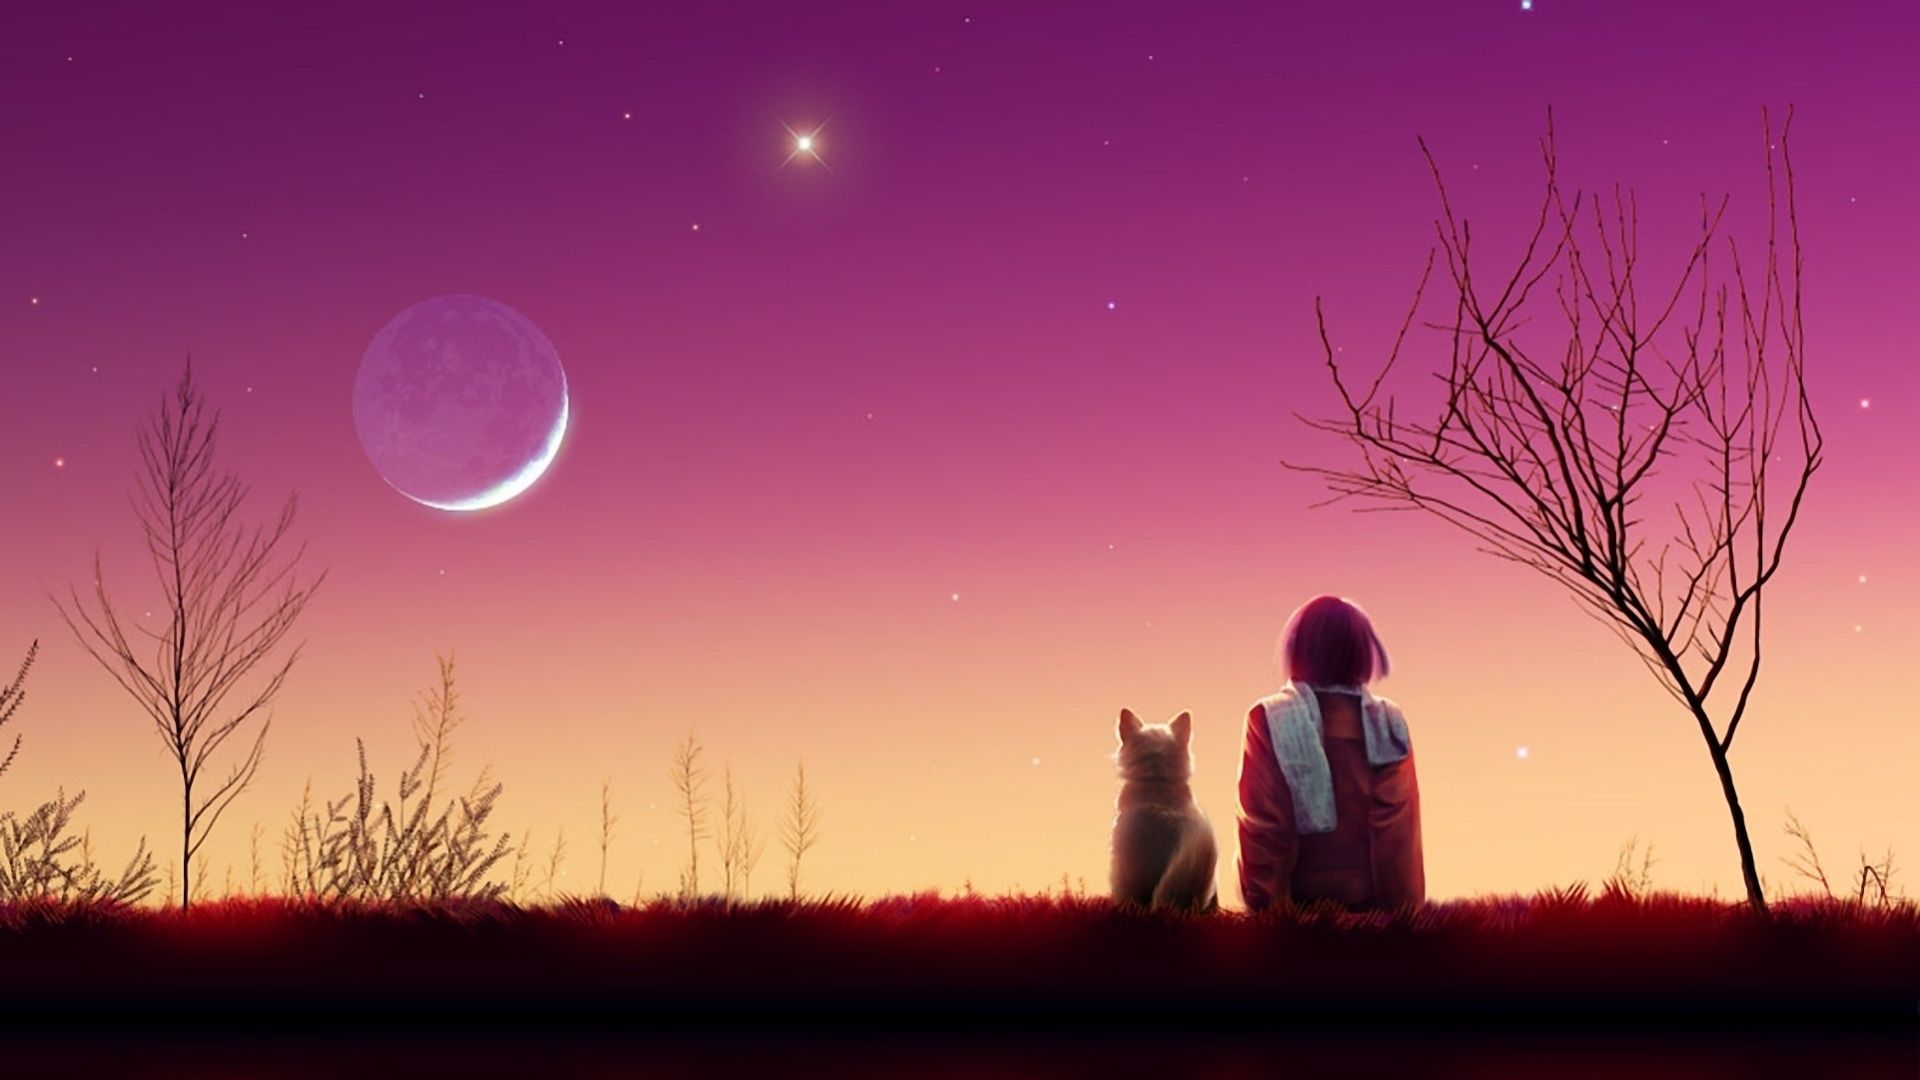 𝐈𝐭𝐬 𝐎𝐤𝐚𝐲  𝐊𝐓𝐇  Ten  Moon painting Anime scenery wallpaper  Night background